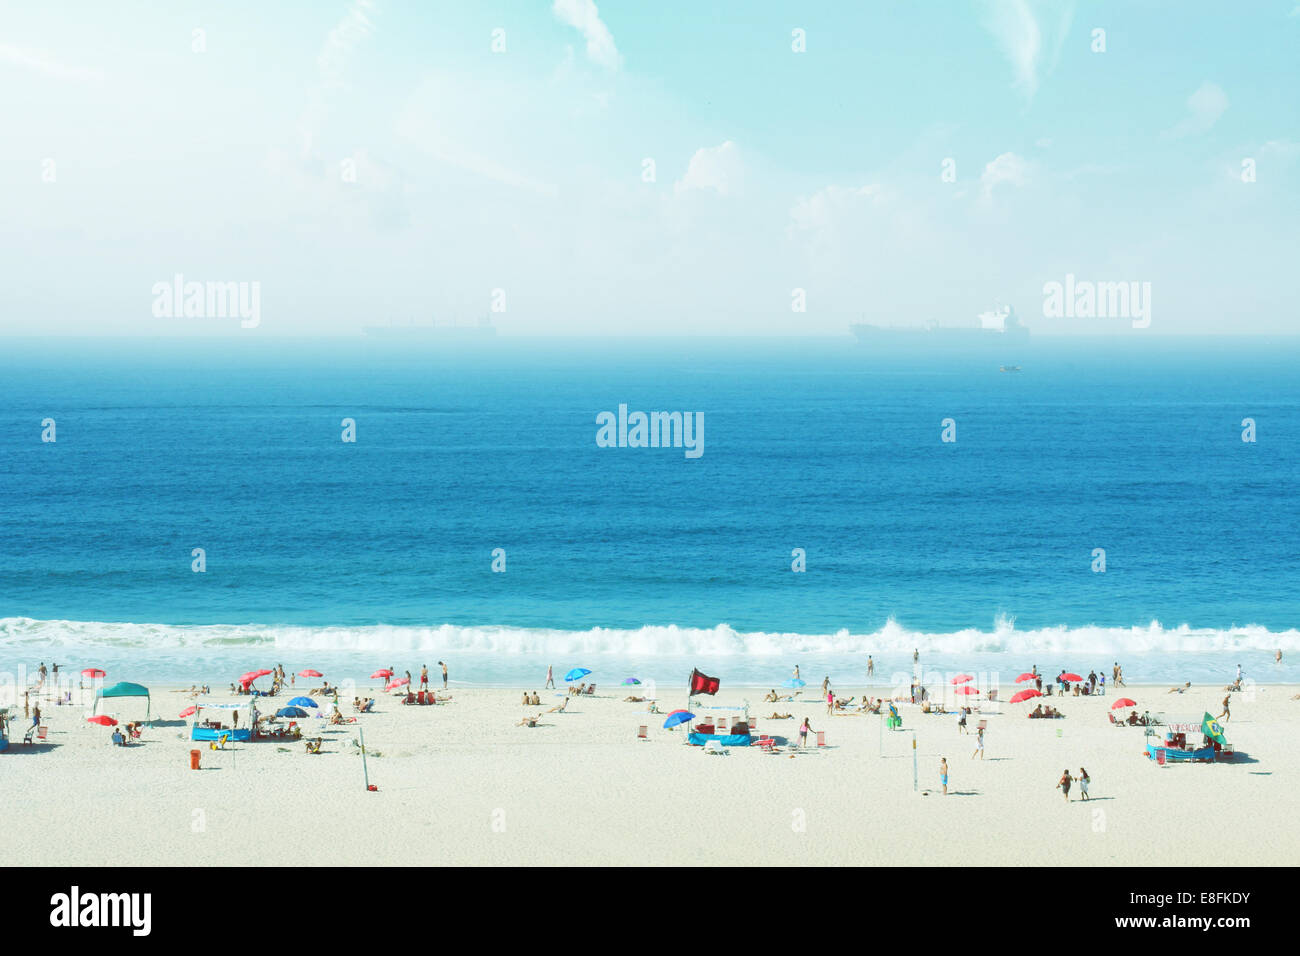 Brazil, Rio de Janeiro, Copacabana, People on beach Stock Photo